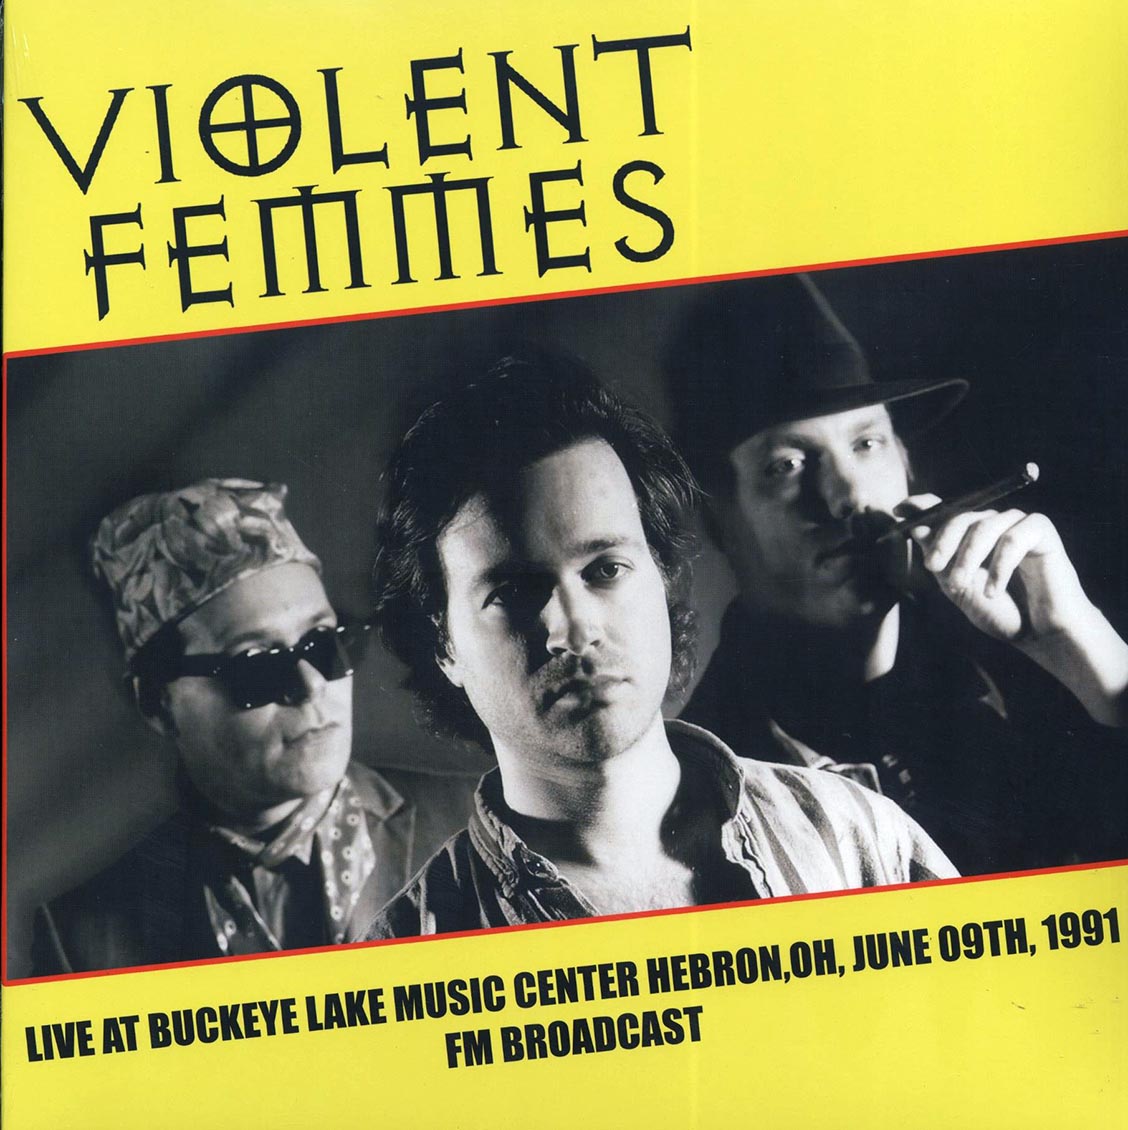 Violent Femmes - Live At Buckeye Lake Music Center Hebron, OH, June 9th, 1991 FM Broadcast (ltd. 500 copies made) - Vinyl LP